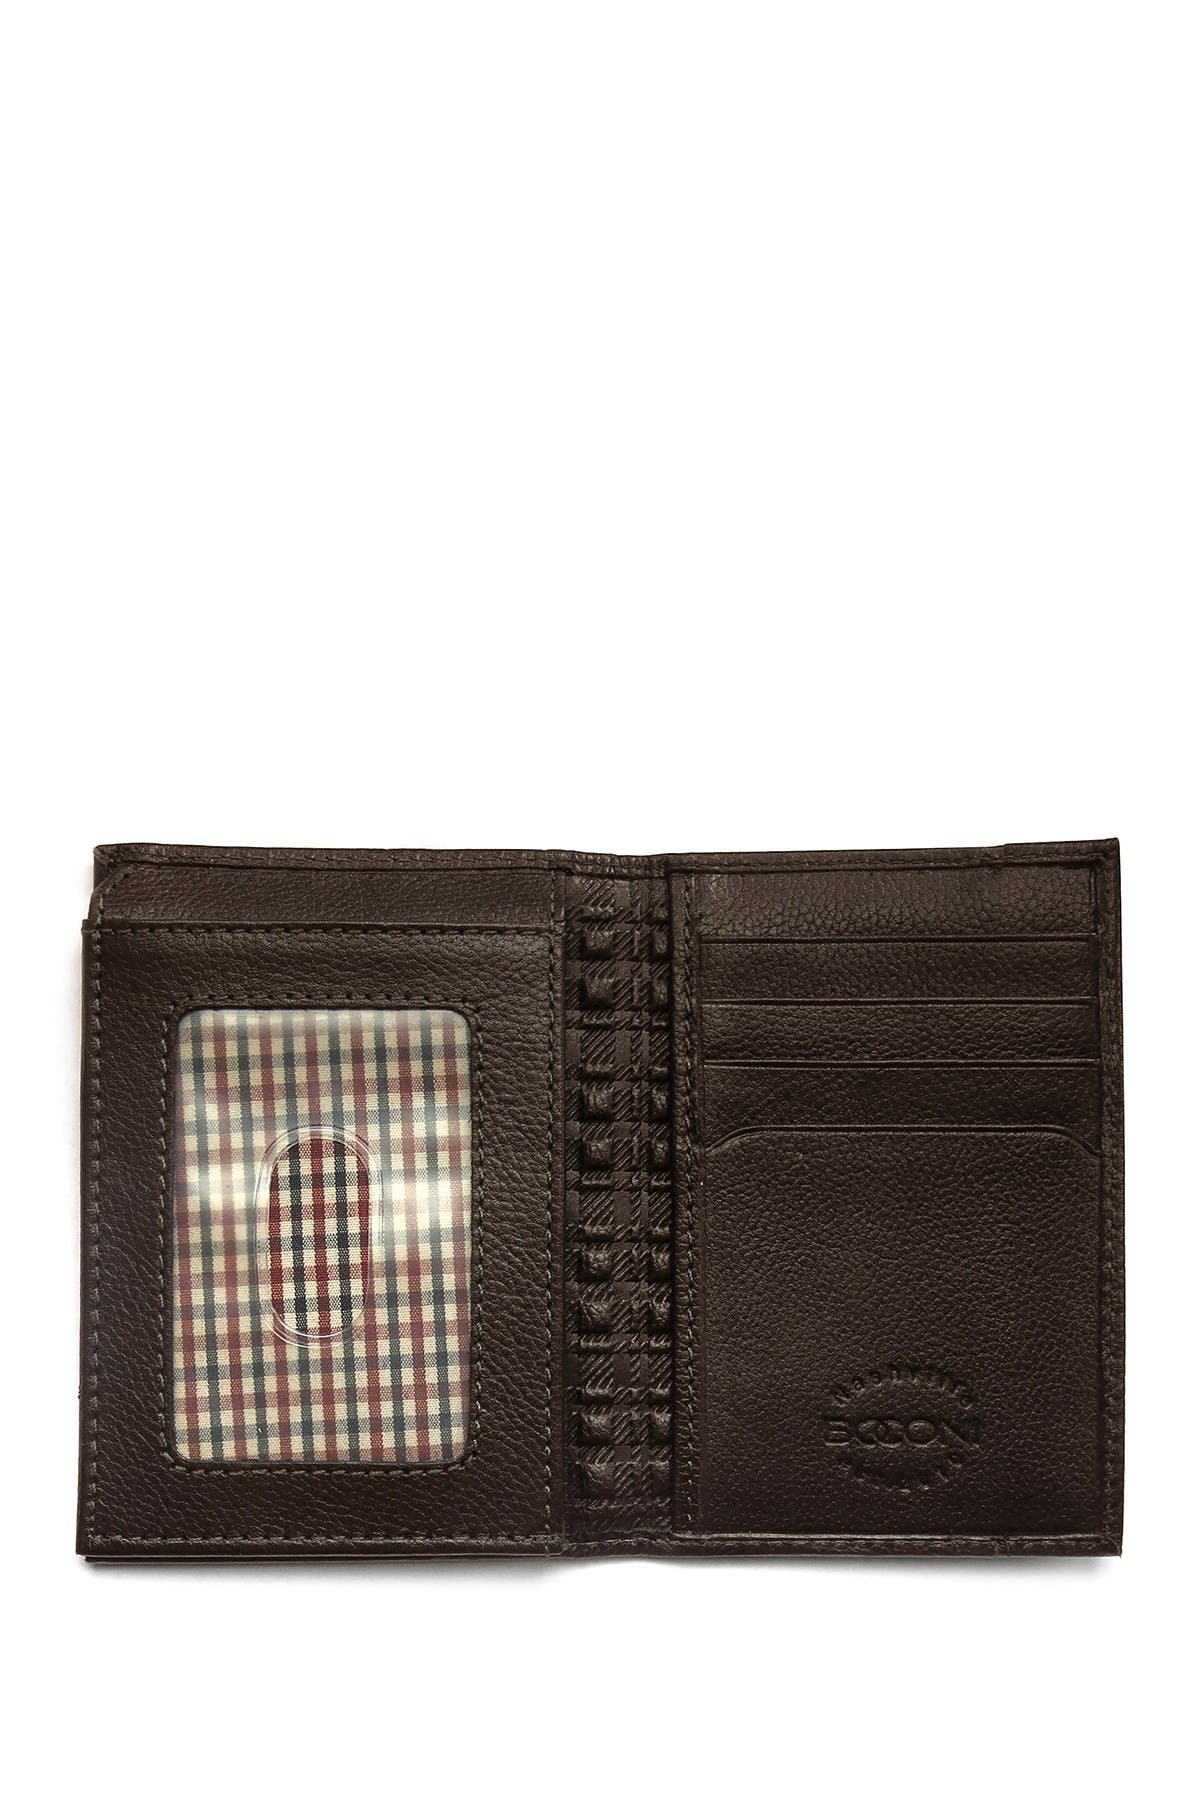 Boconi Leather Bi-fold Wallet In Medium Beige2